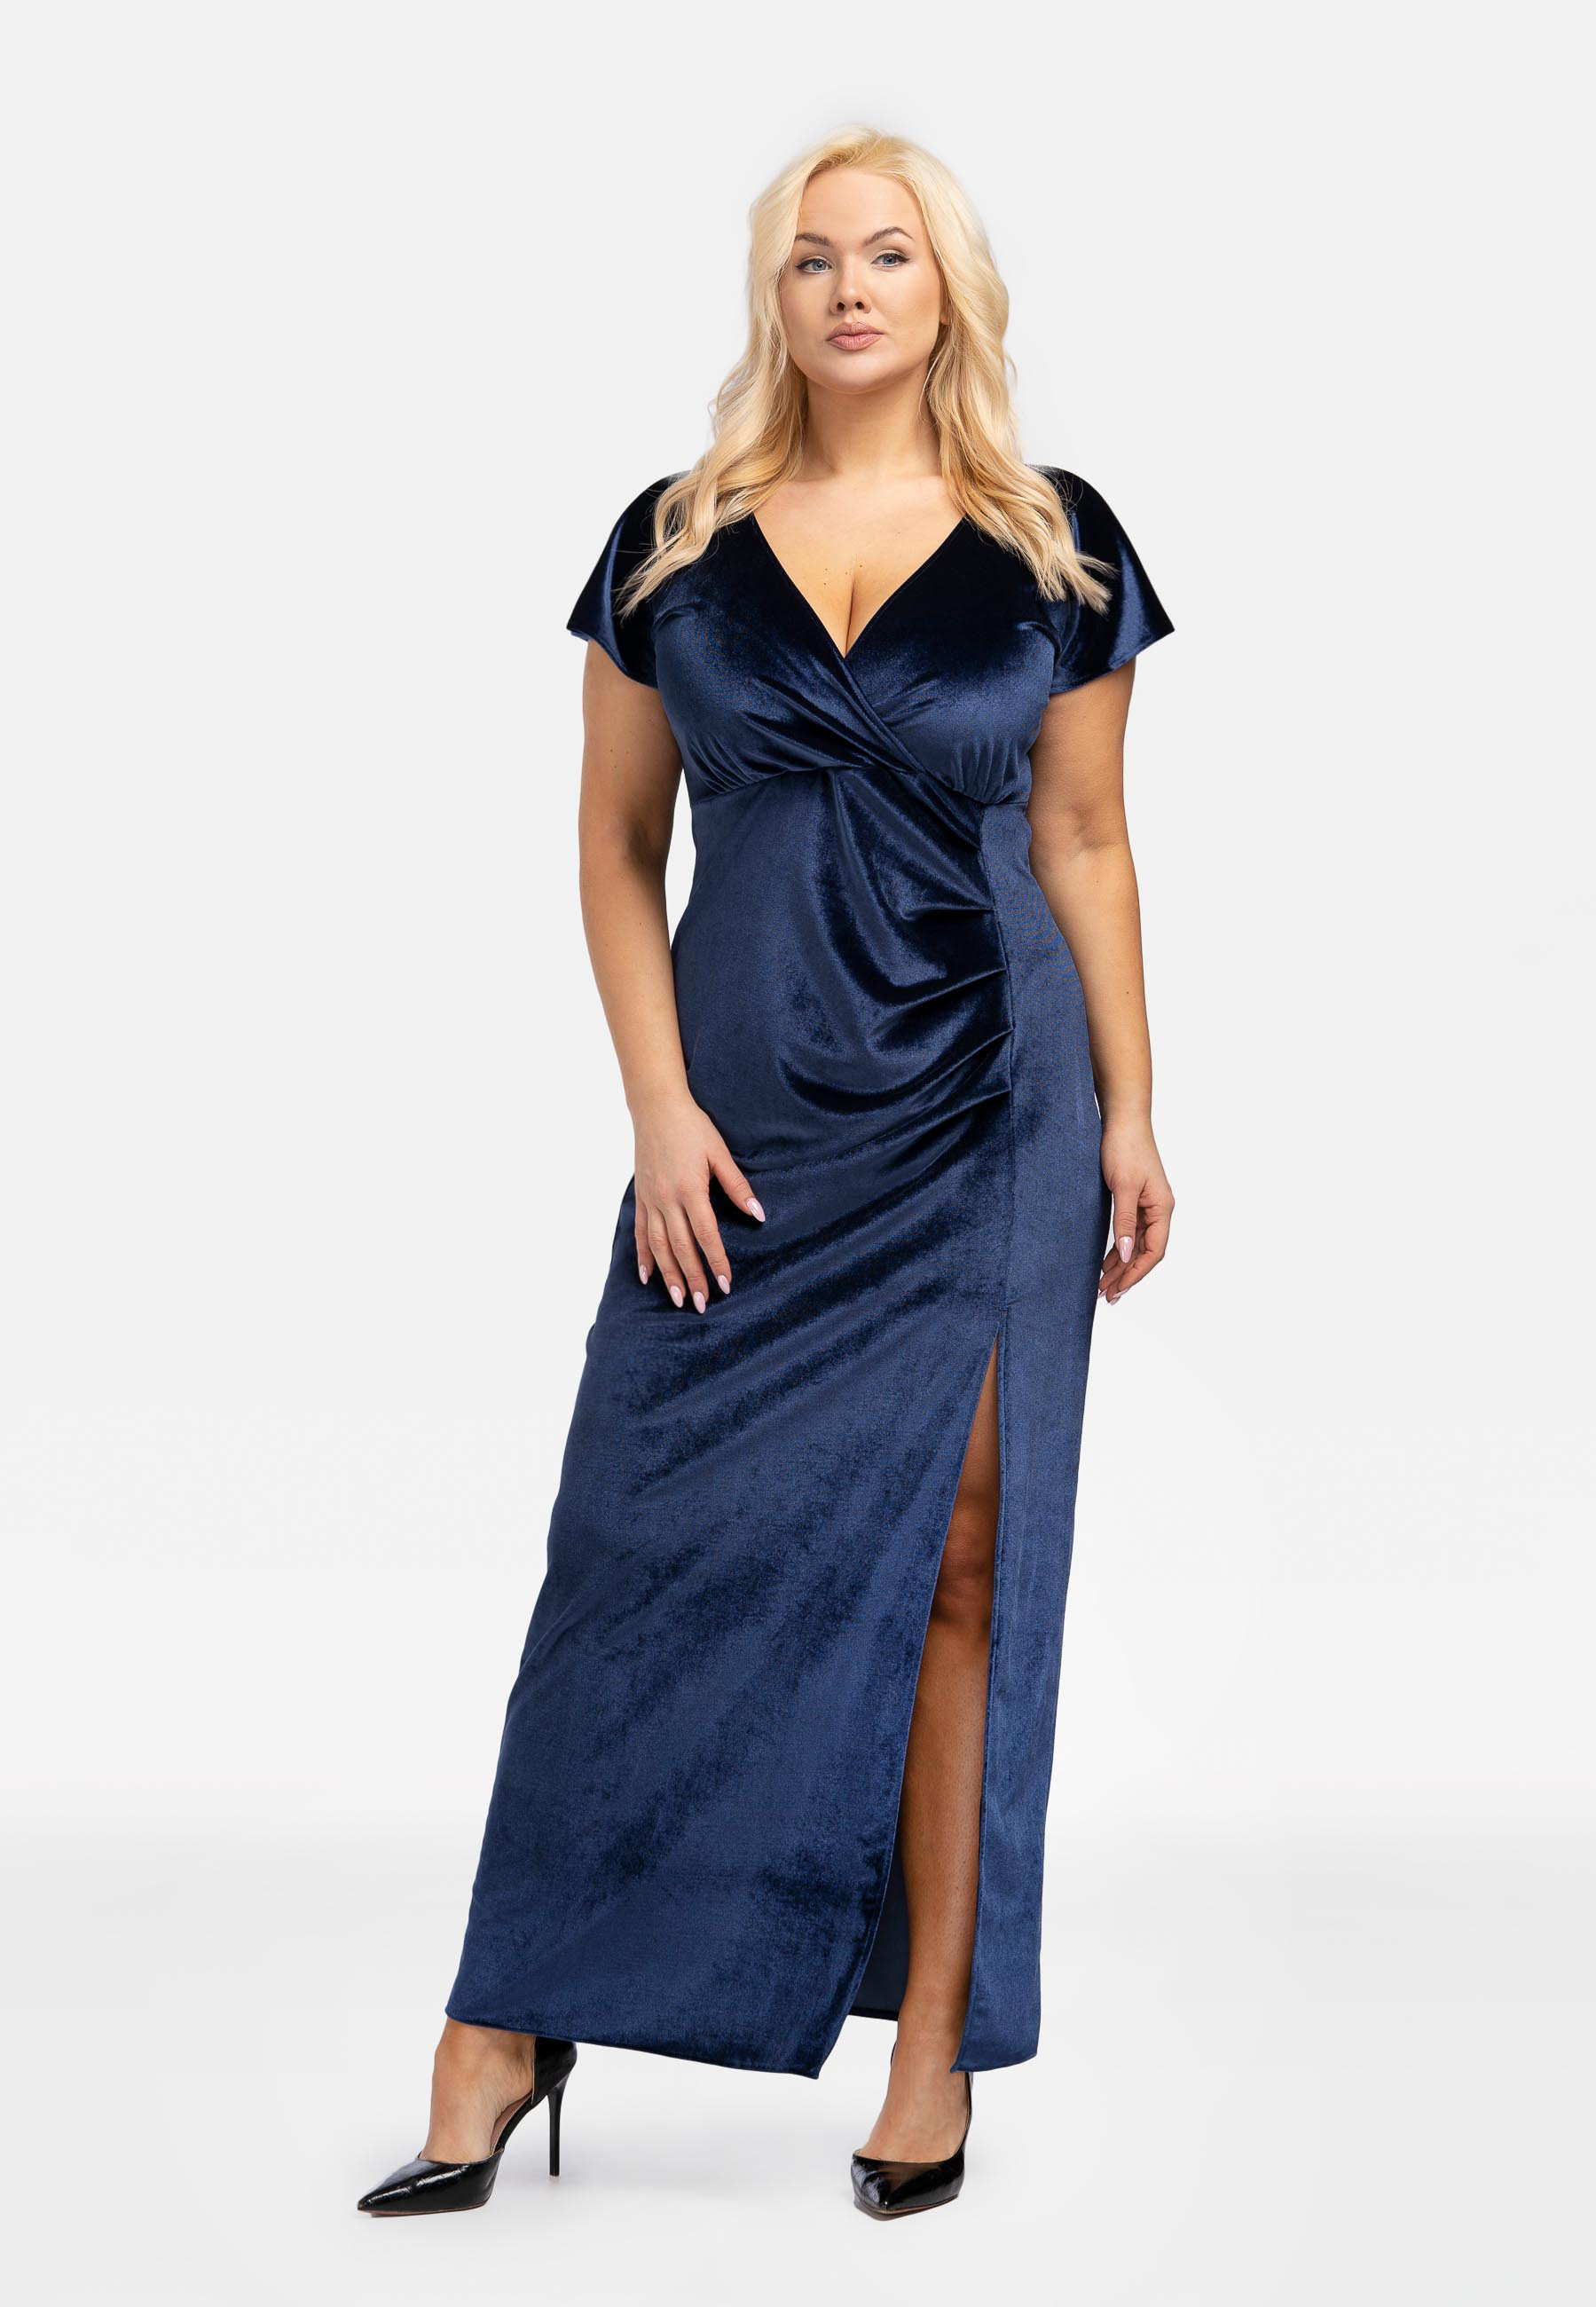 Karko Woman's Dress SC216 Navy Blue